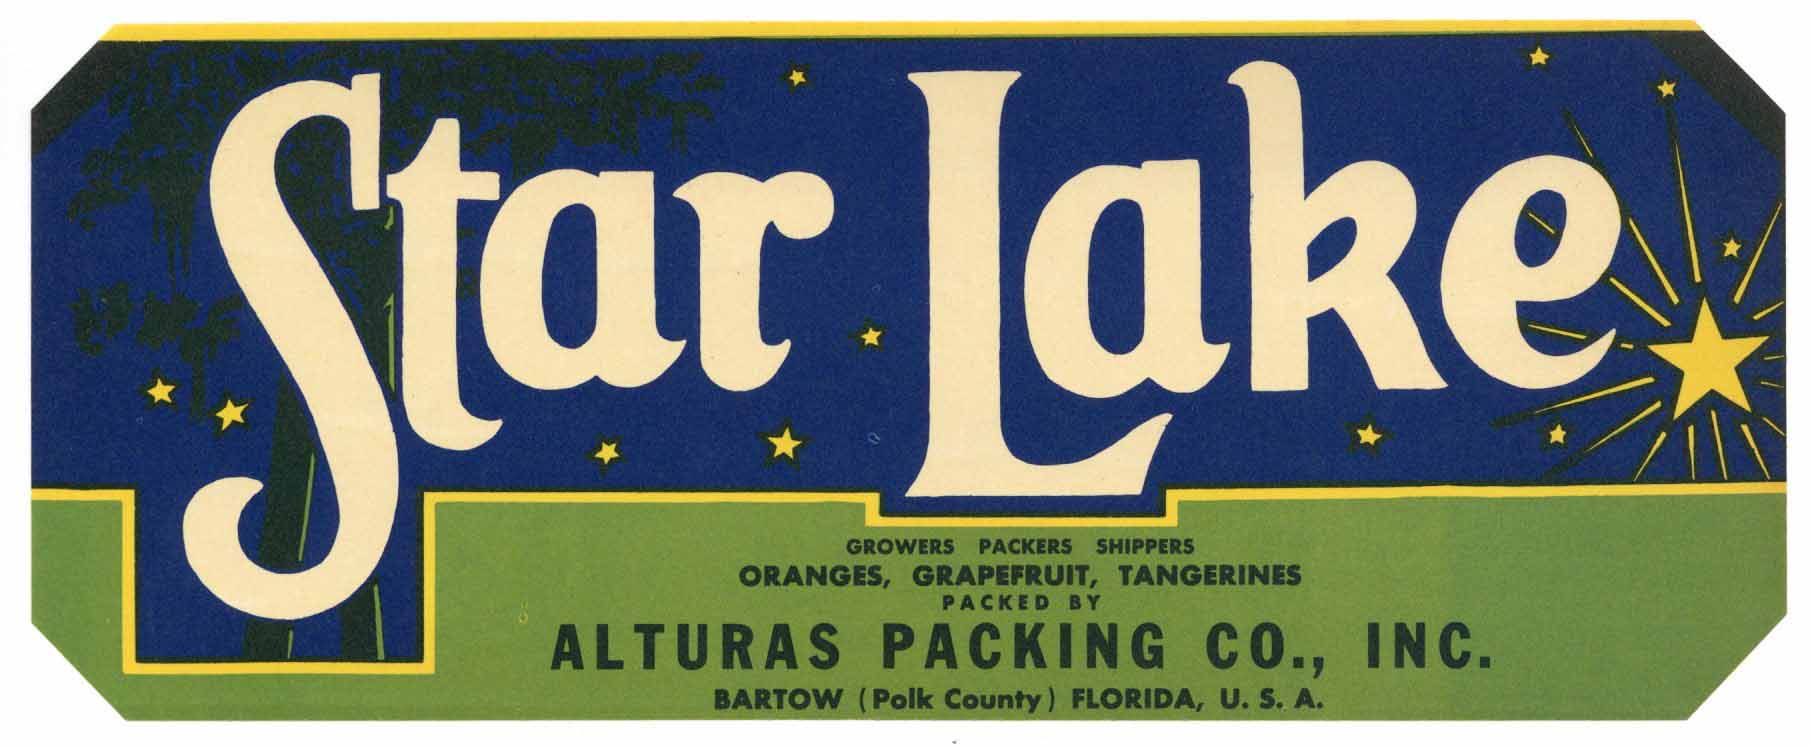 Star Lake Brand Vintage Bartow Florida Citrus Crate Label